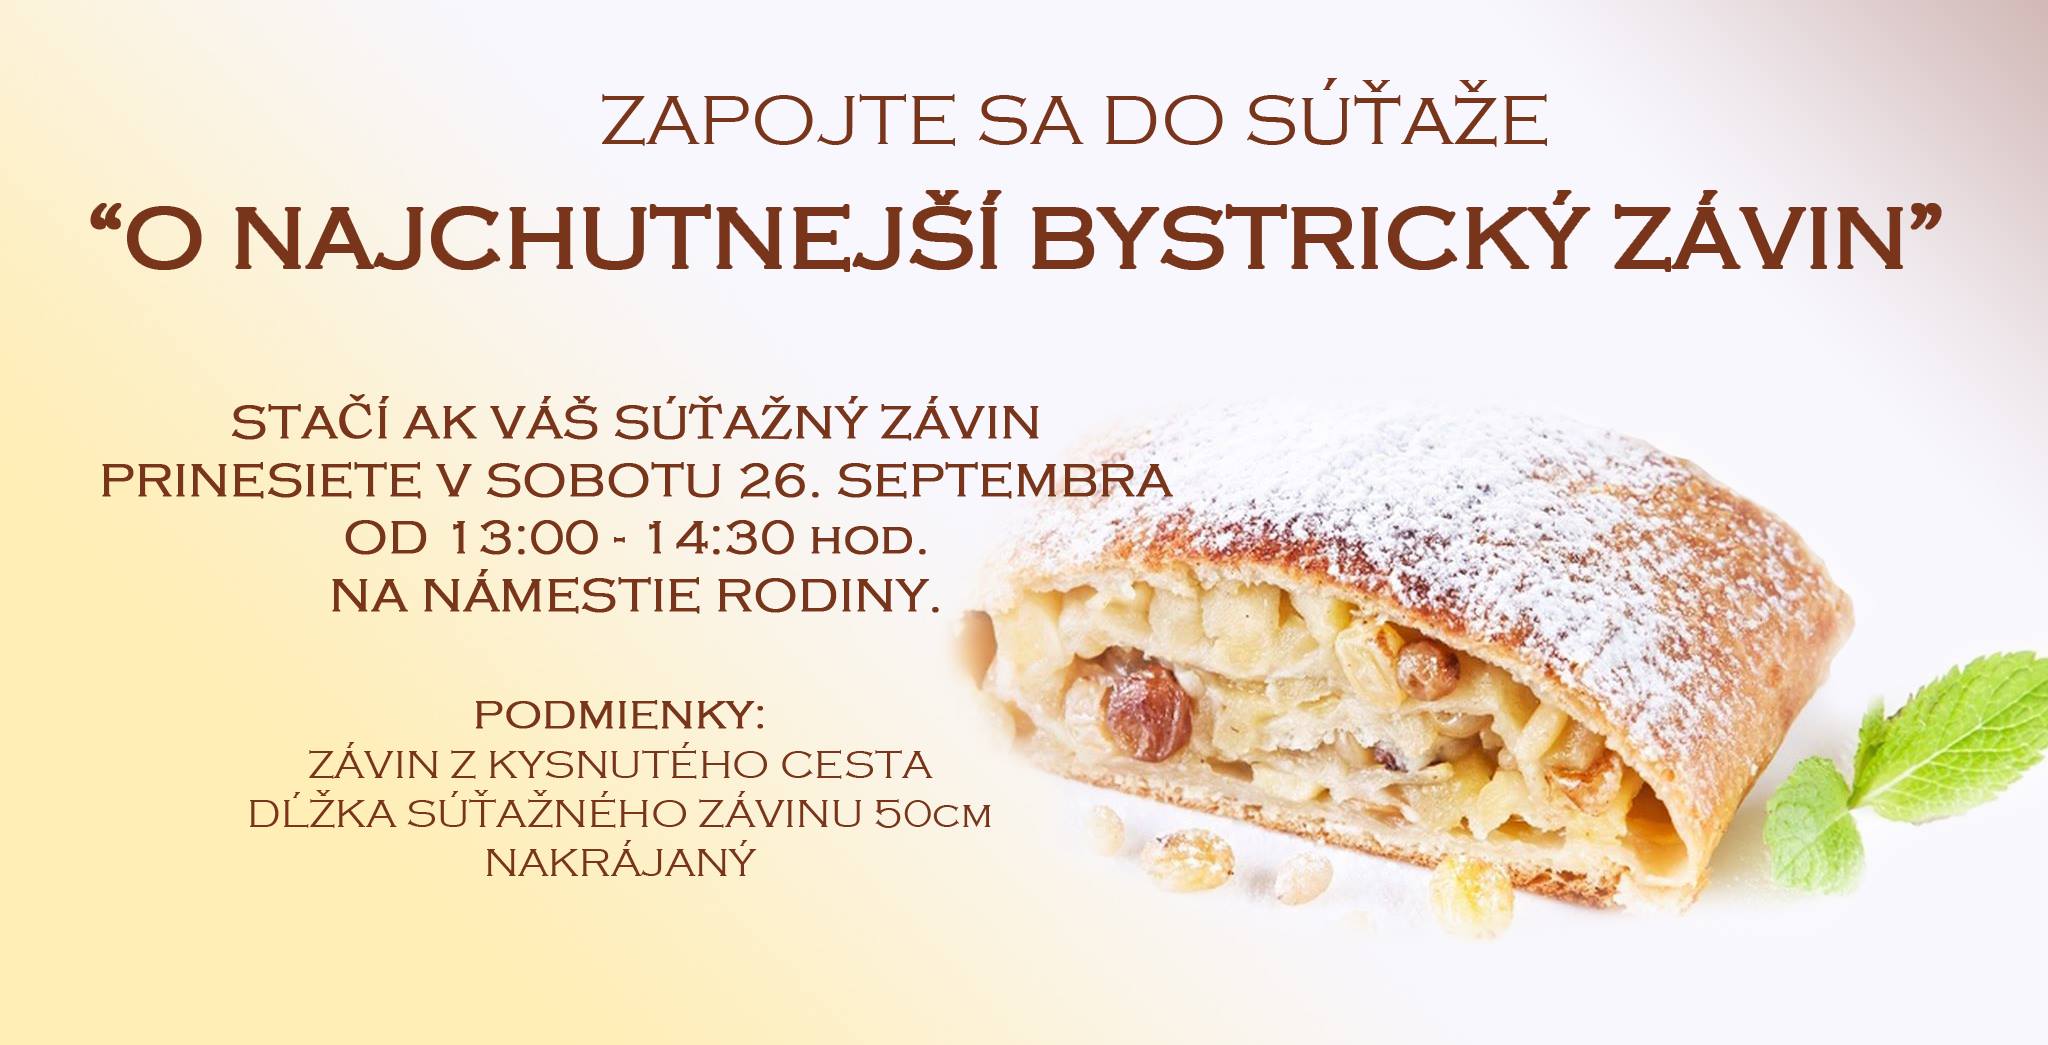 O najchutnej bystrick zvin Zhorsk Bystrica 2015